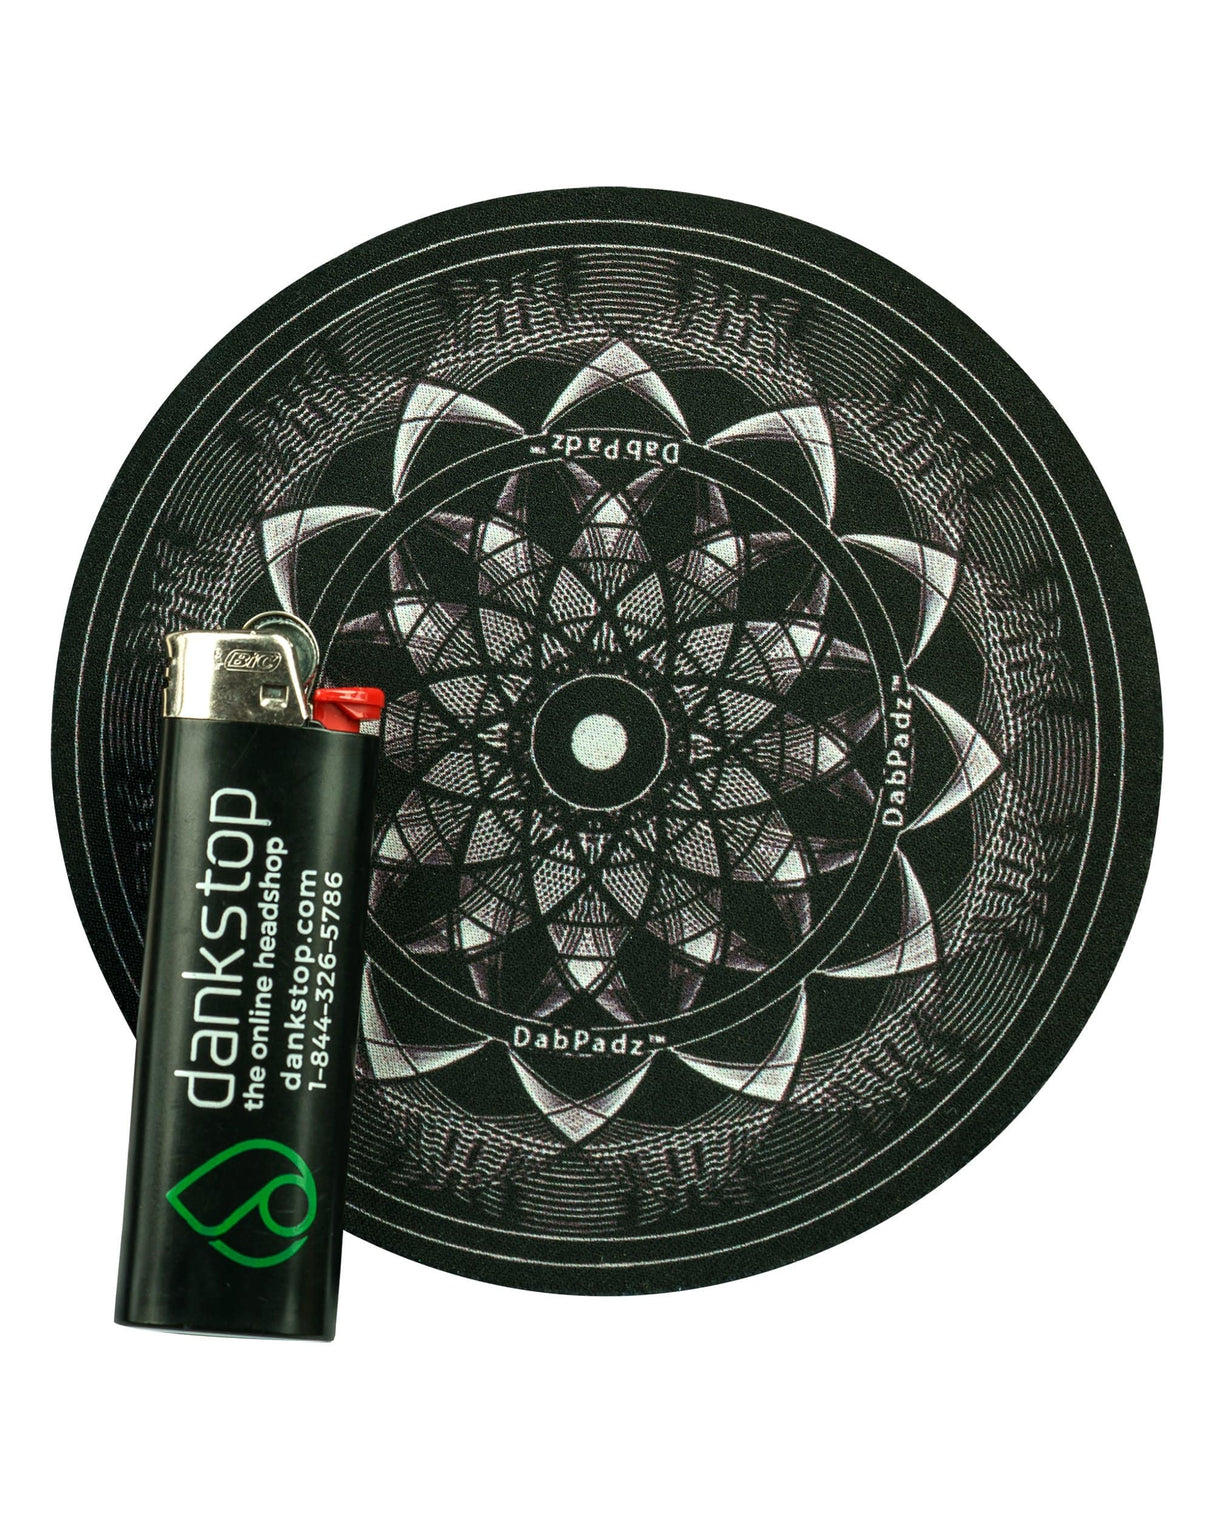 DabPadz 5" Black Lotus Rubber Dropmat with dankstop lighter, top view on white background